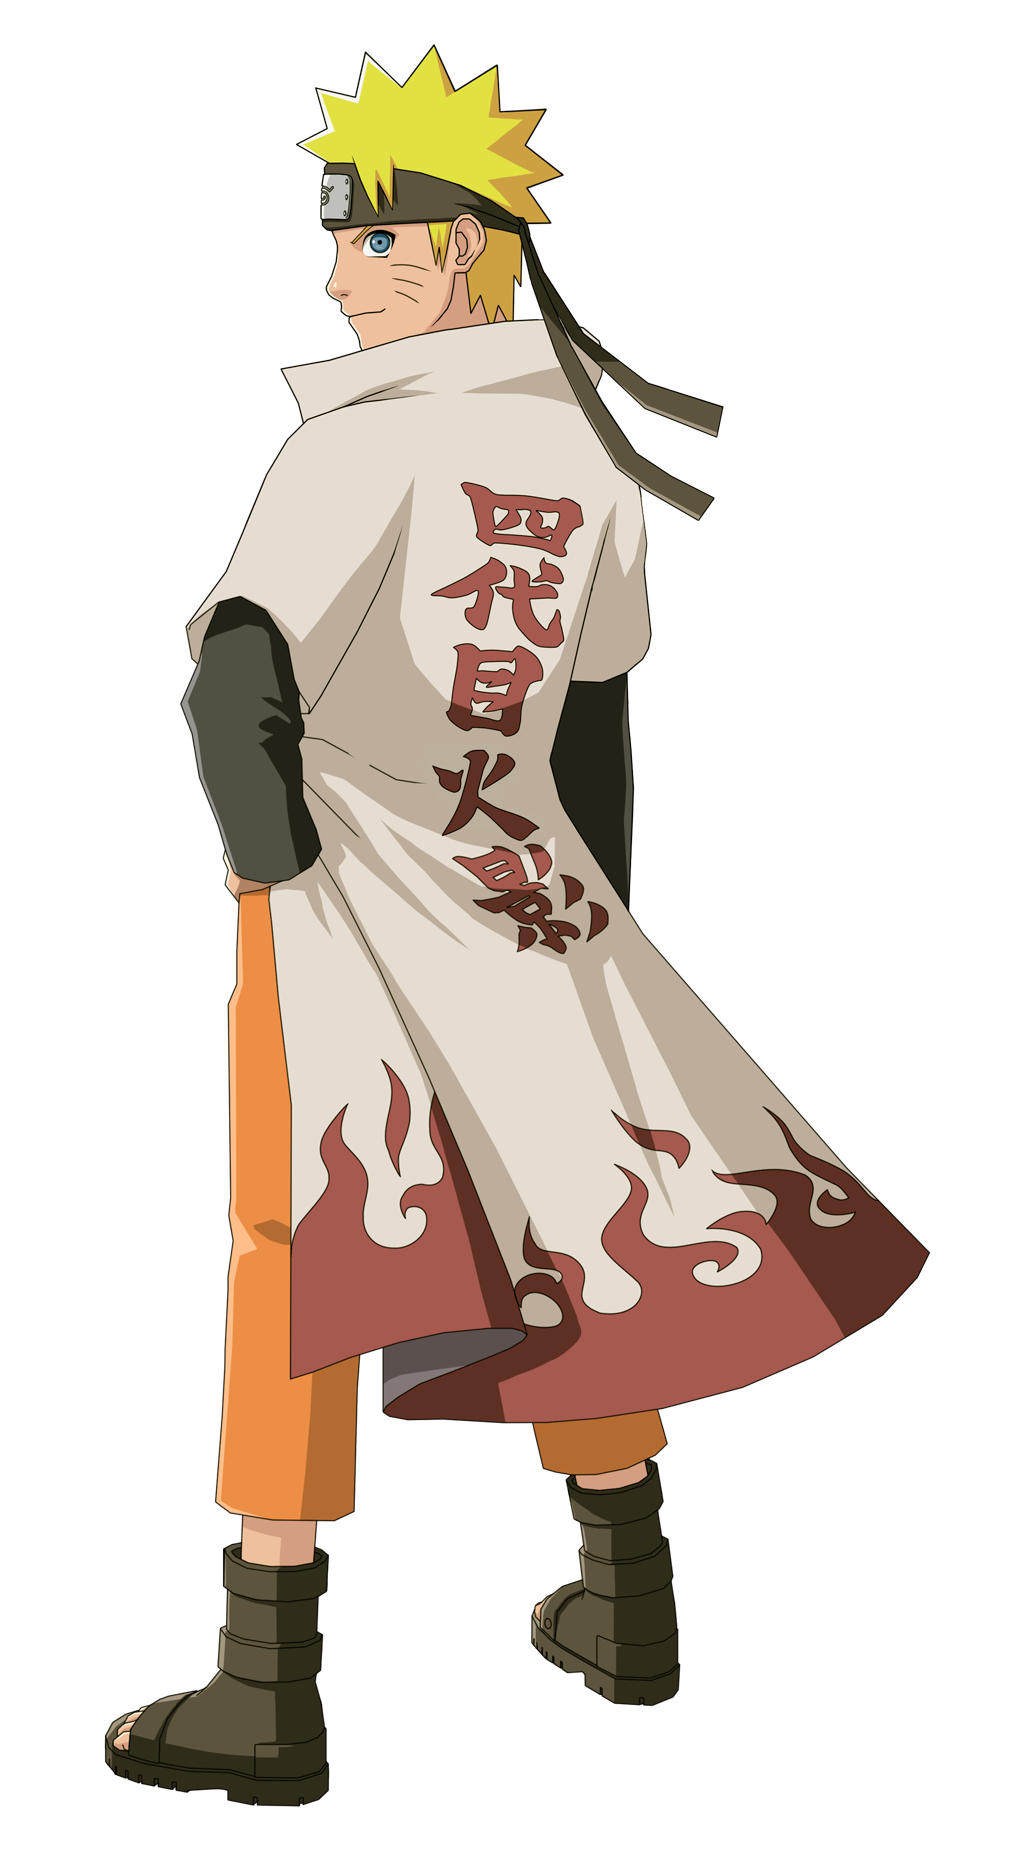 Free: Render Naruto HD, Uzumaki Naruto illustration transparent  